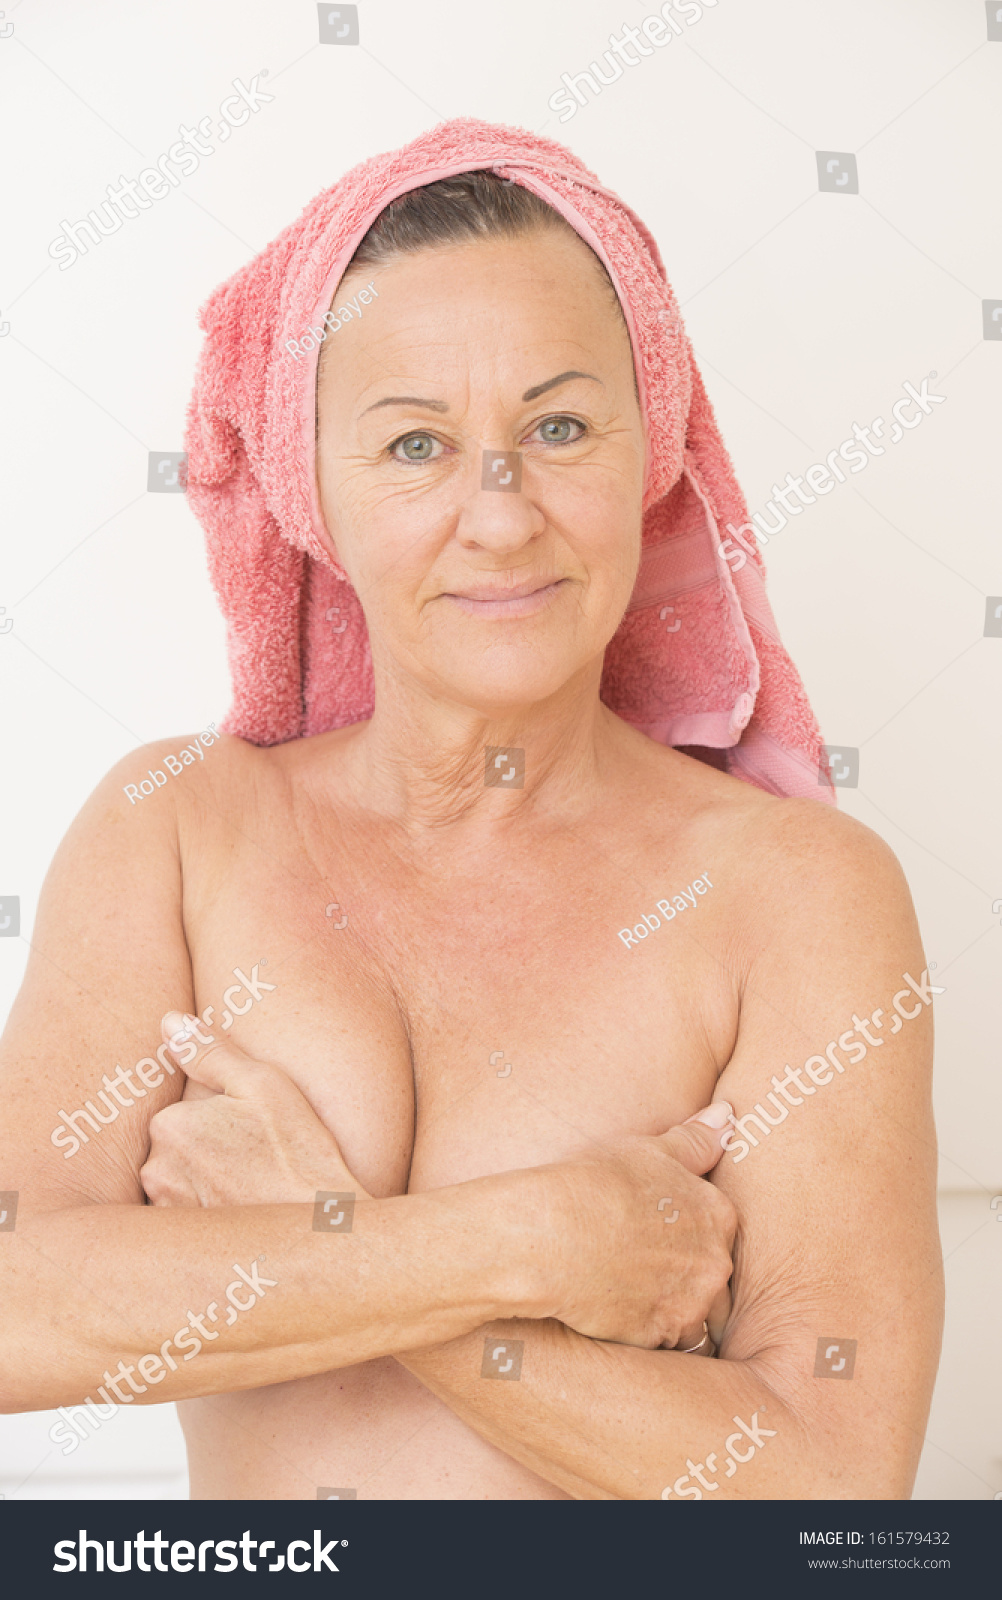 Older woman naked